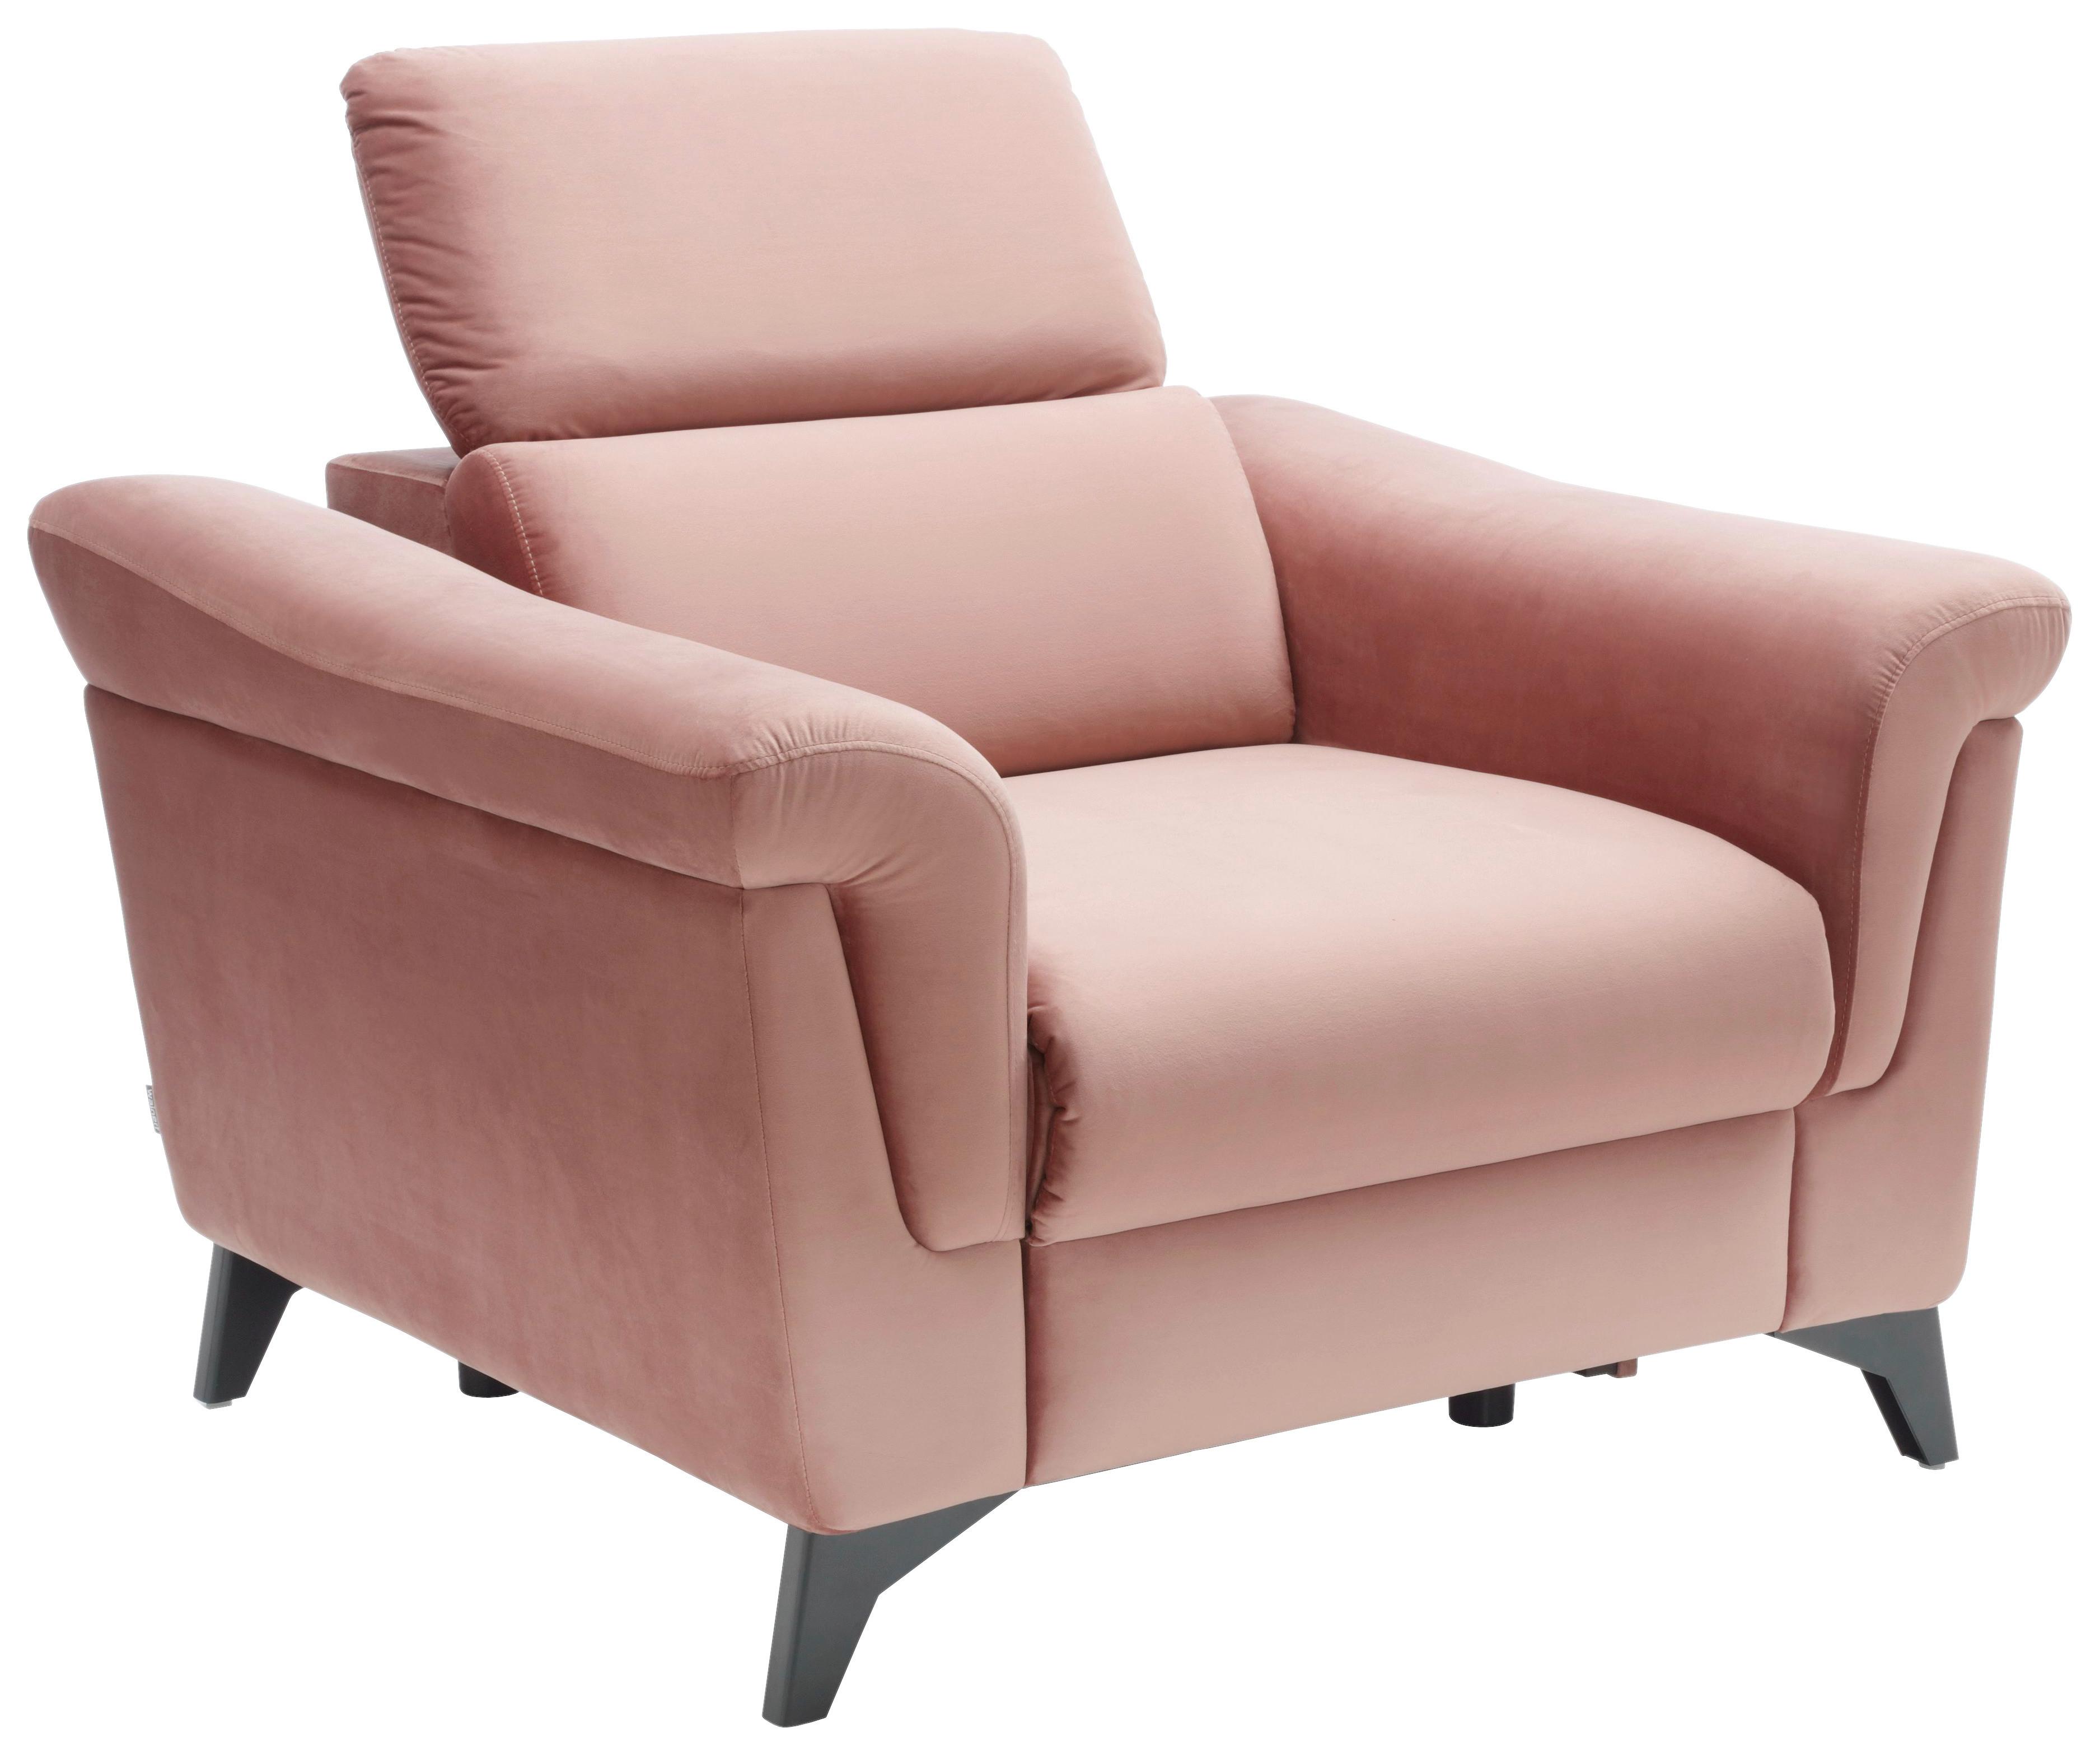 Fotelja Hampton - pink/crna, Modern, tekstil/drvo (112/100/109cm) - Premium Living